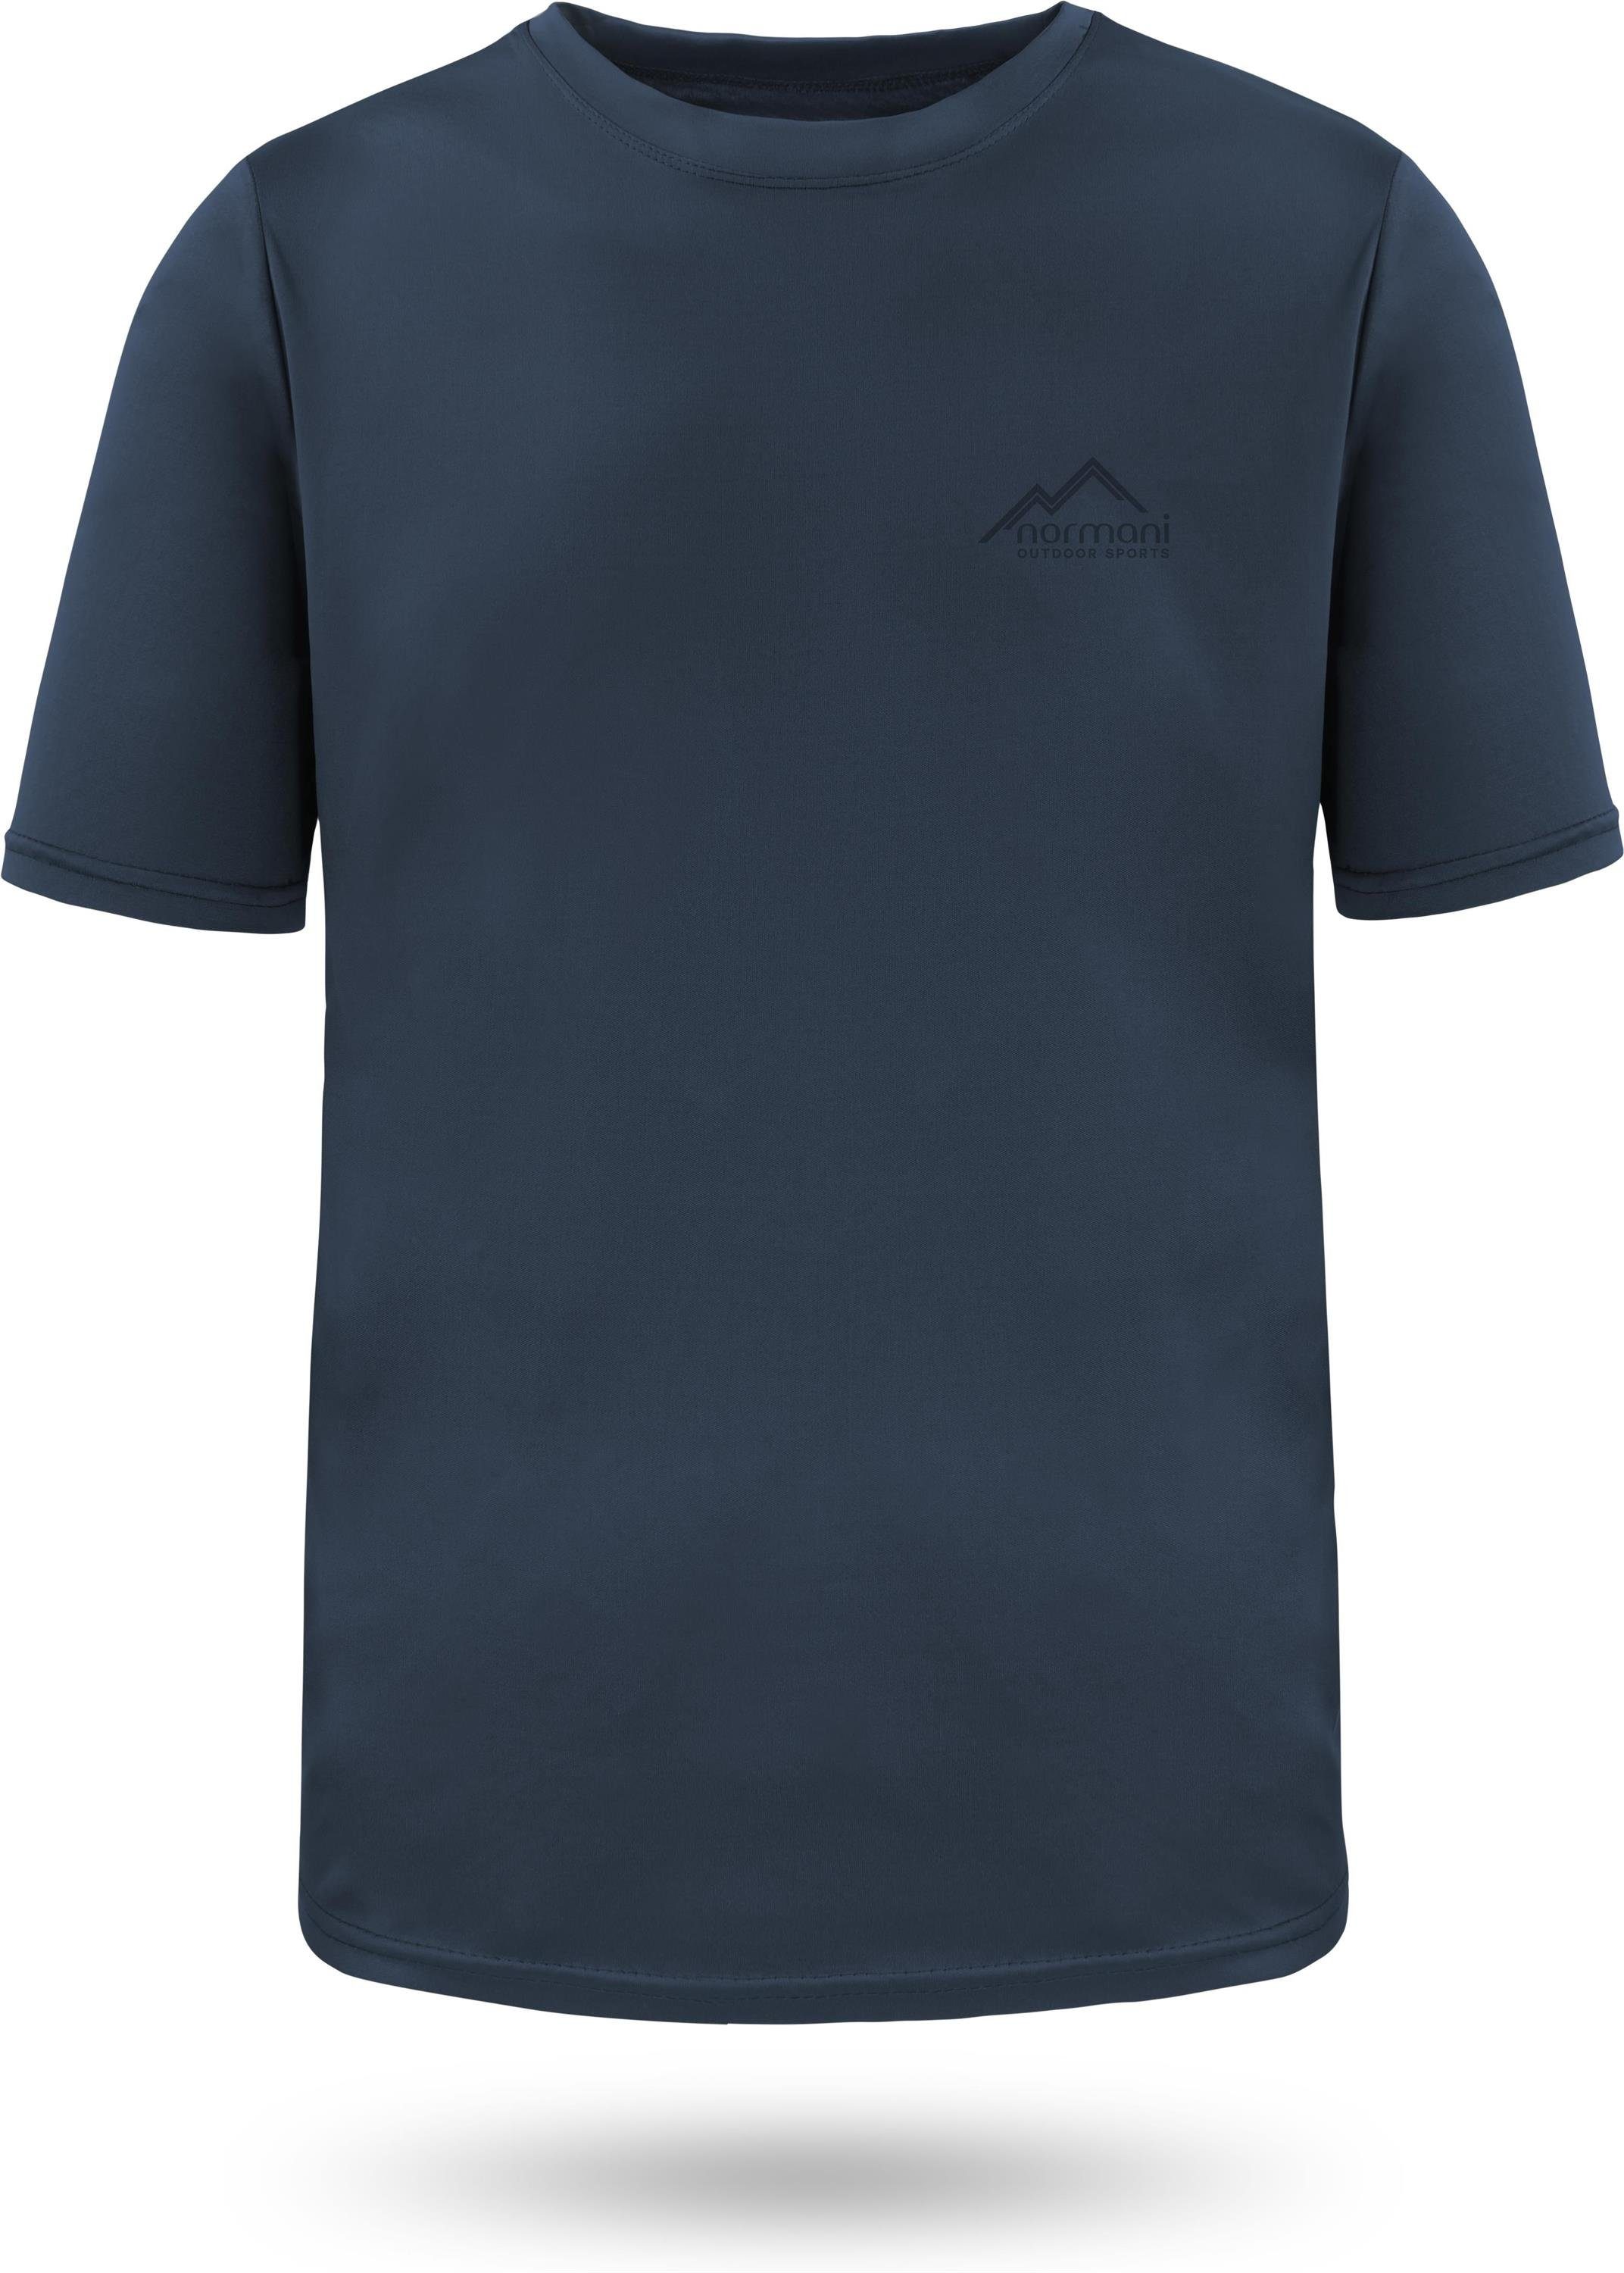 normani Funktionsshirt Herren T-Shirt Agra Kurzarm Sportswear Funktions-Sport Fitness Shirt mt Cooling-Material Navy